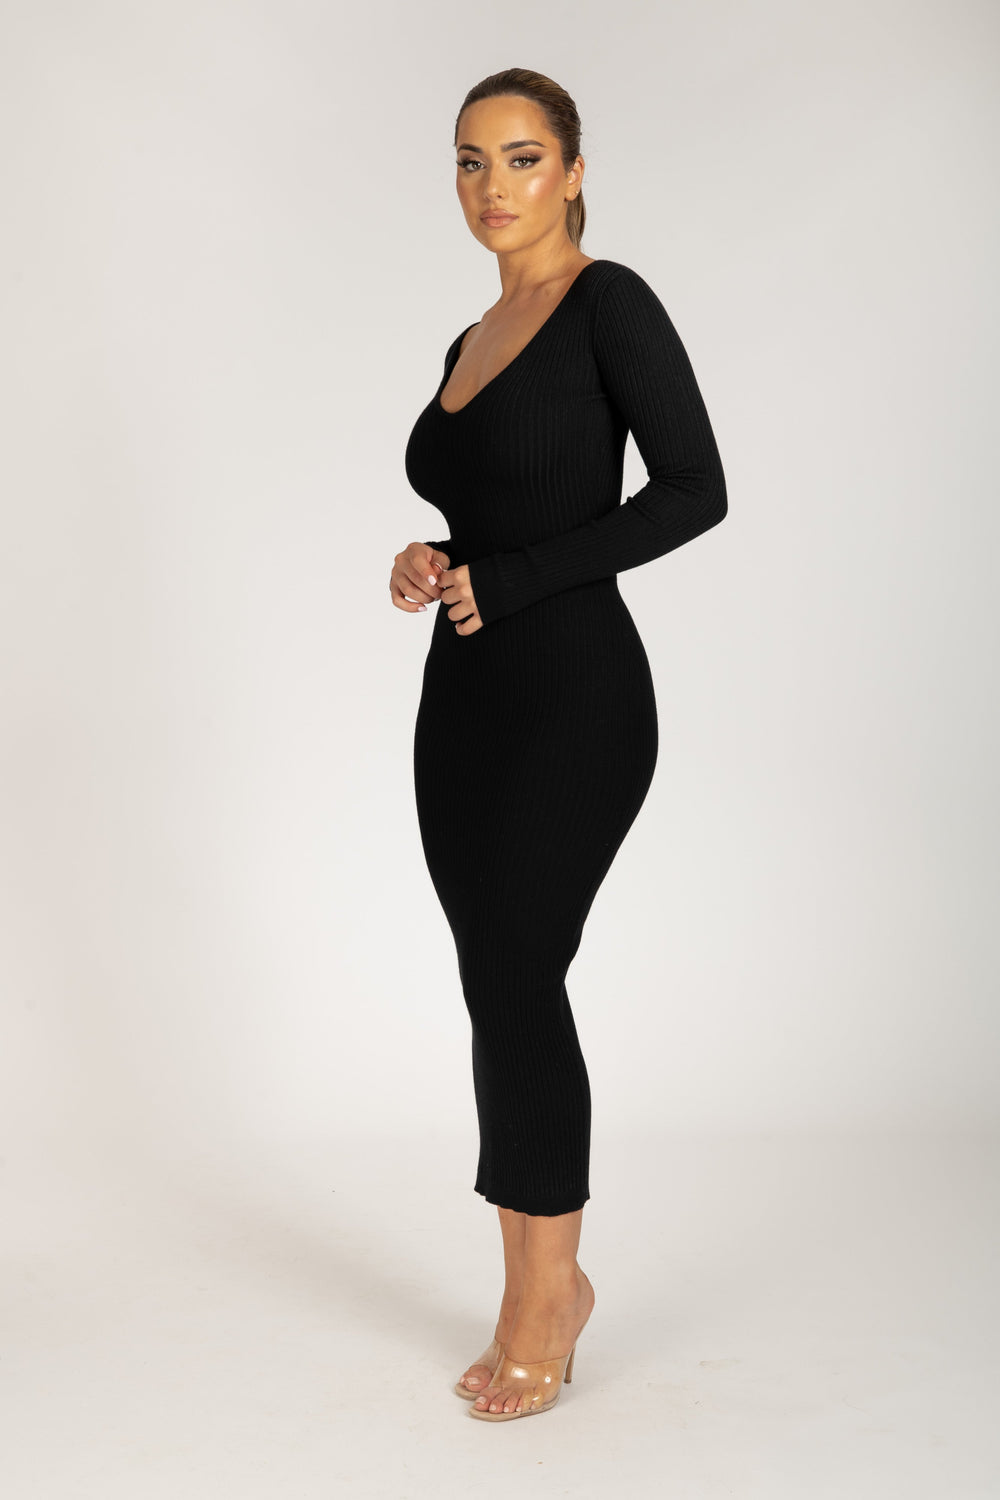 Nina Long Sleeve Knit Midi Dress - Black